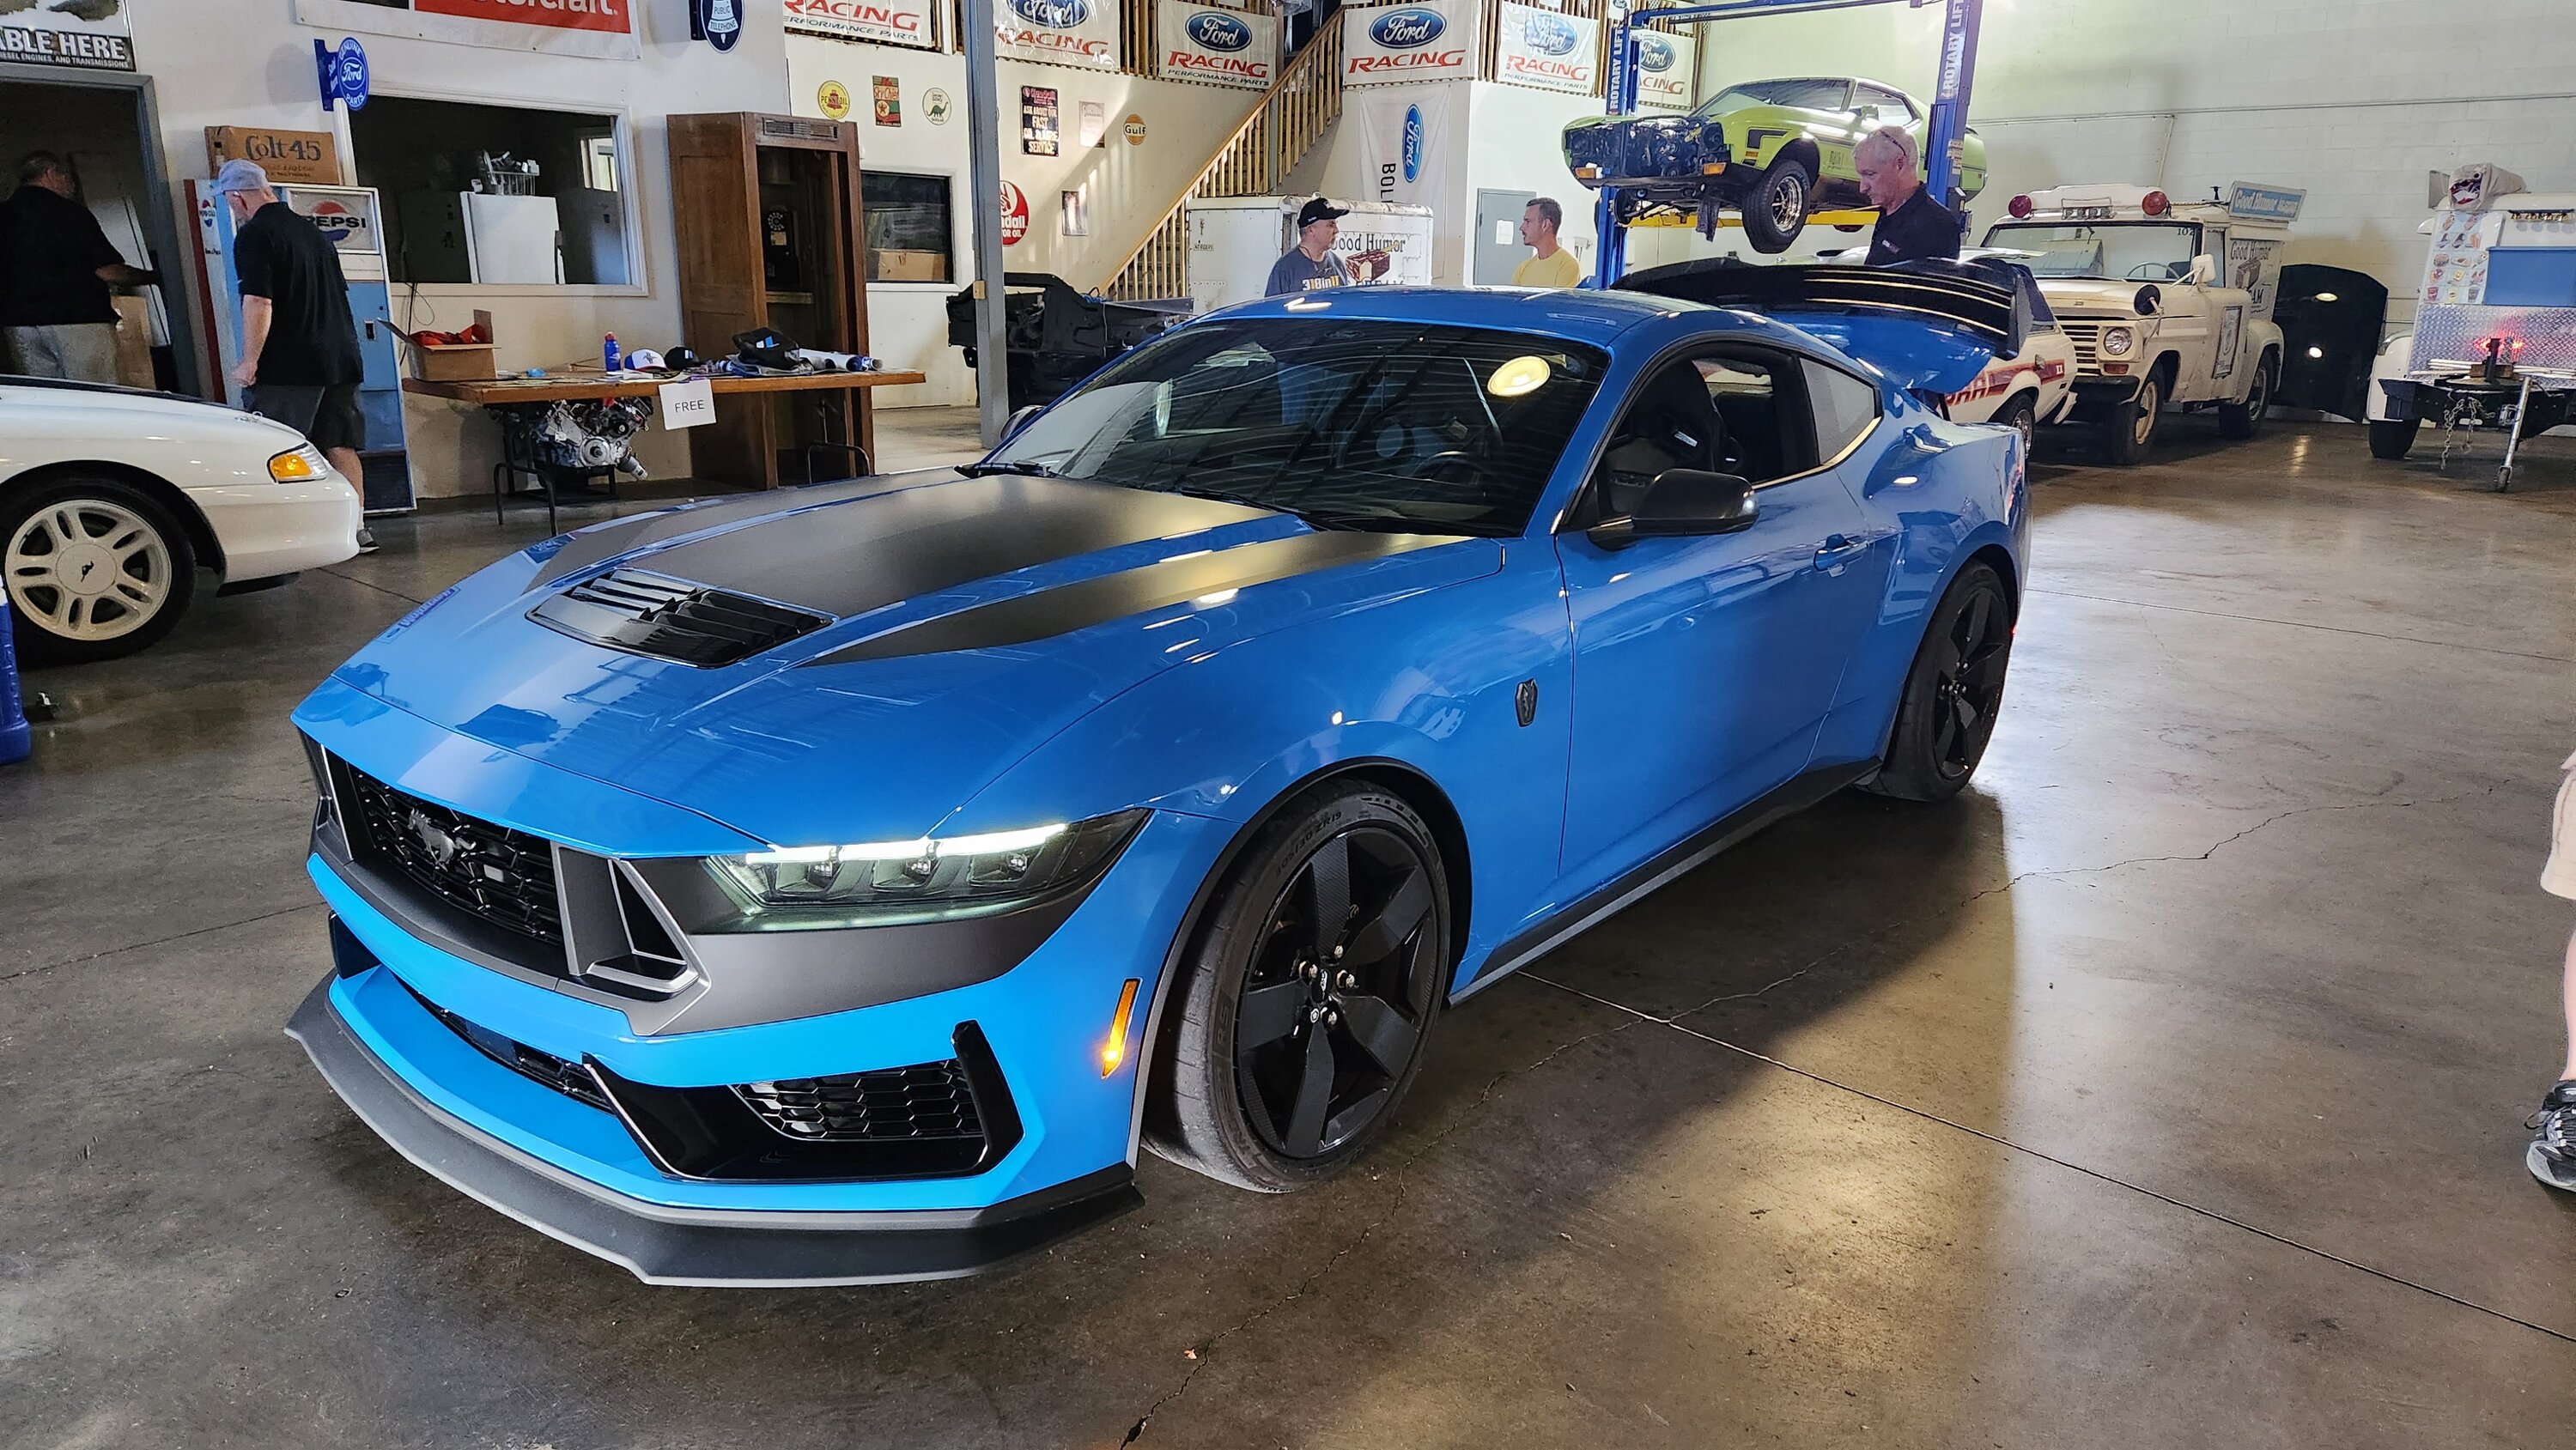 S650 Mustang Grabber Blue Dark Horse with Handling Pack in Detroit Area 20230818_102104